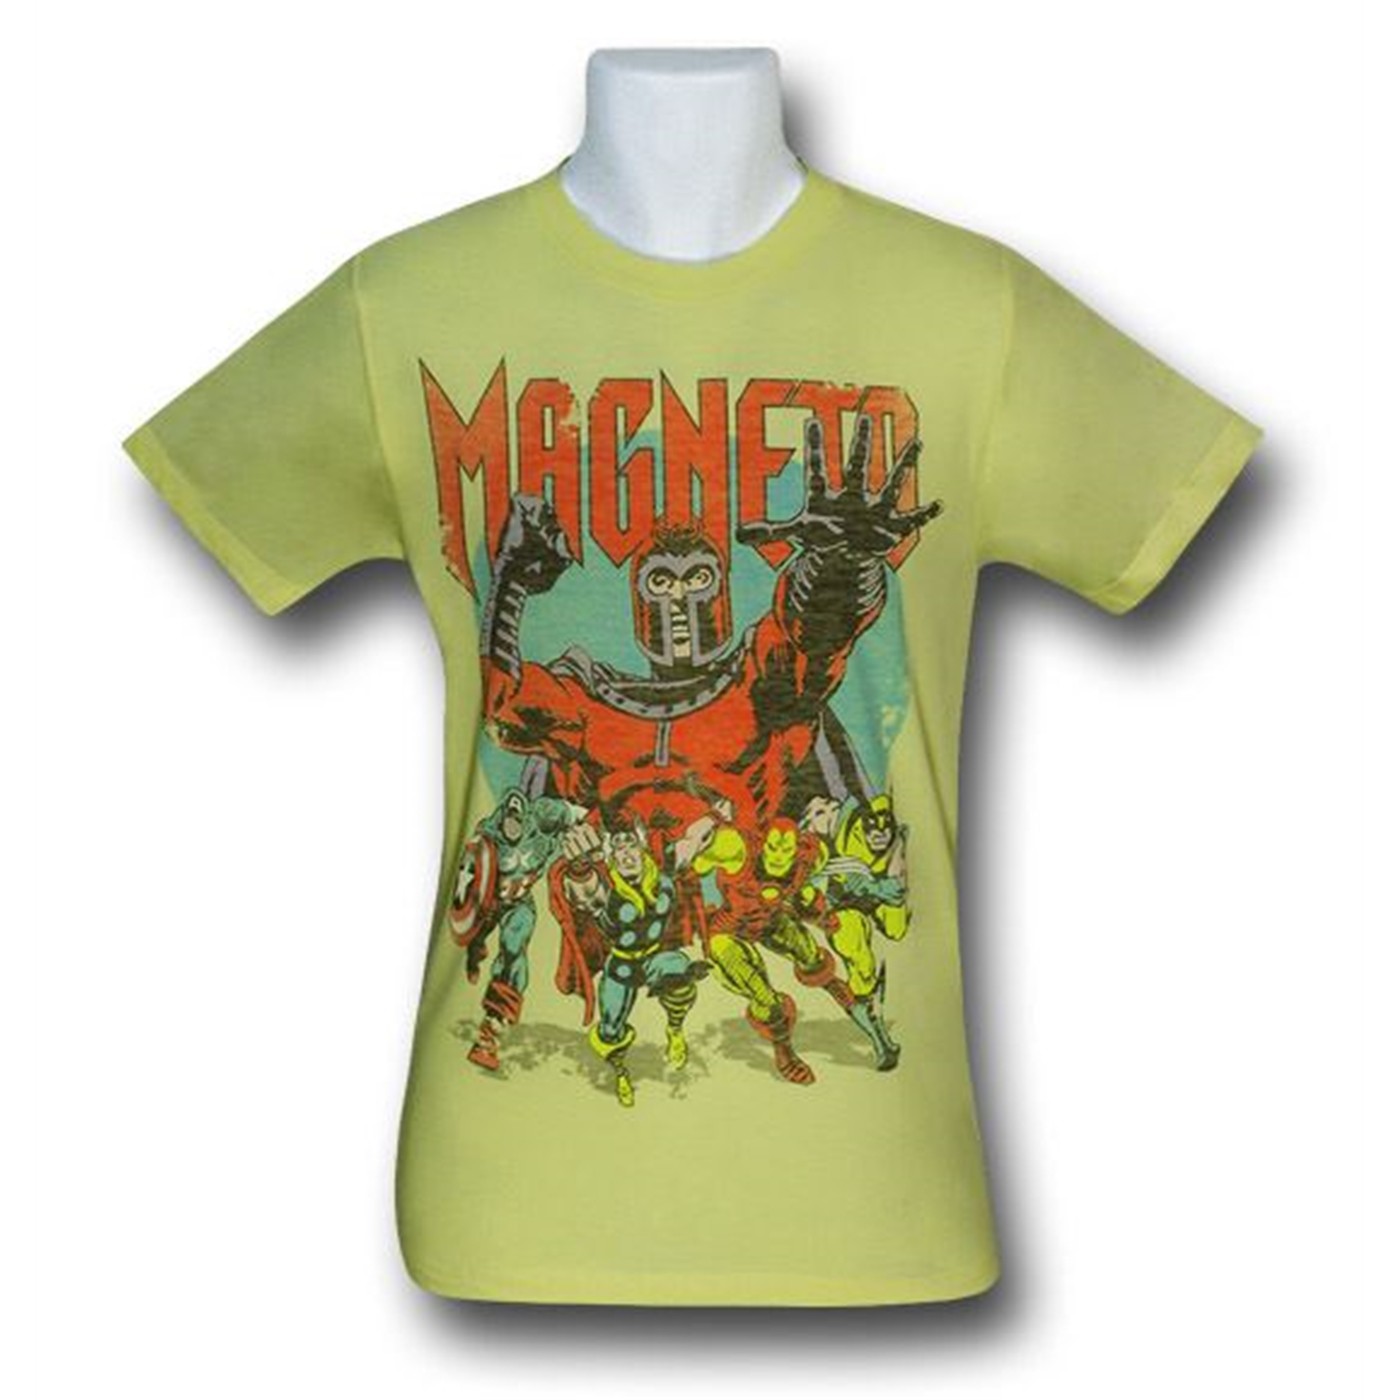 Magneto Run Yellow 30 Single T-Shirt